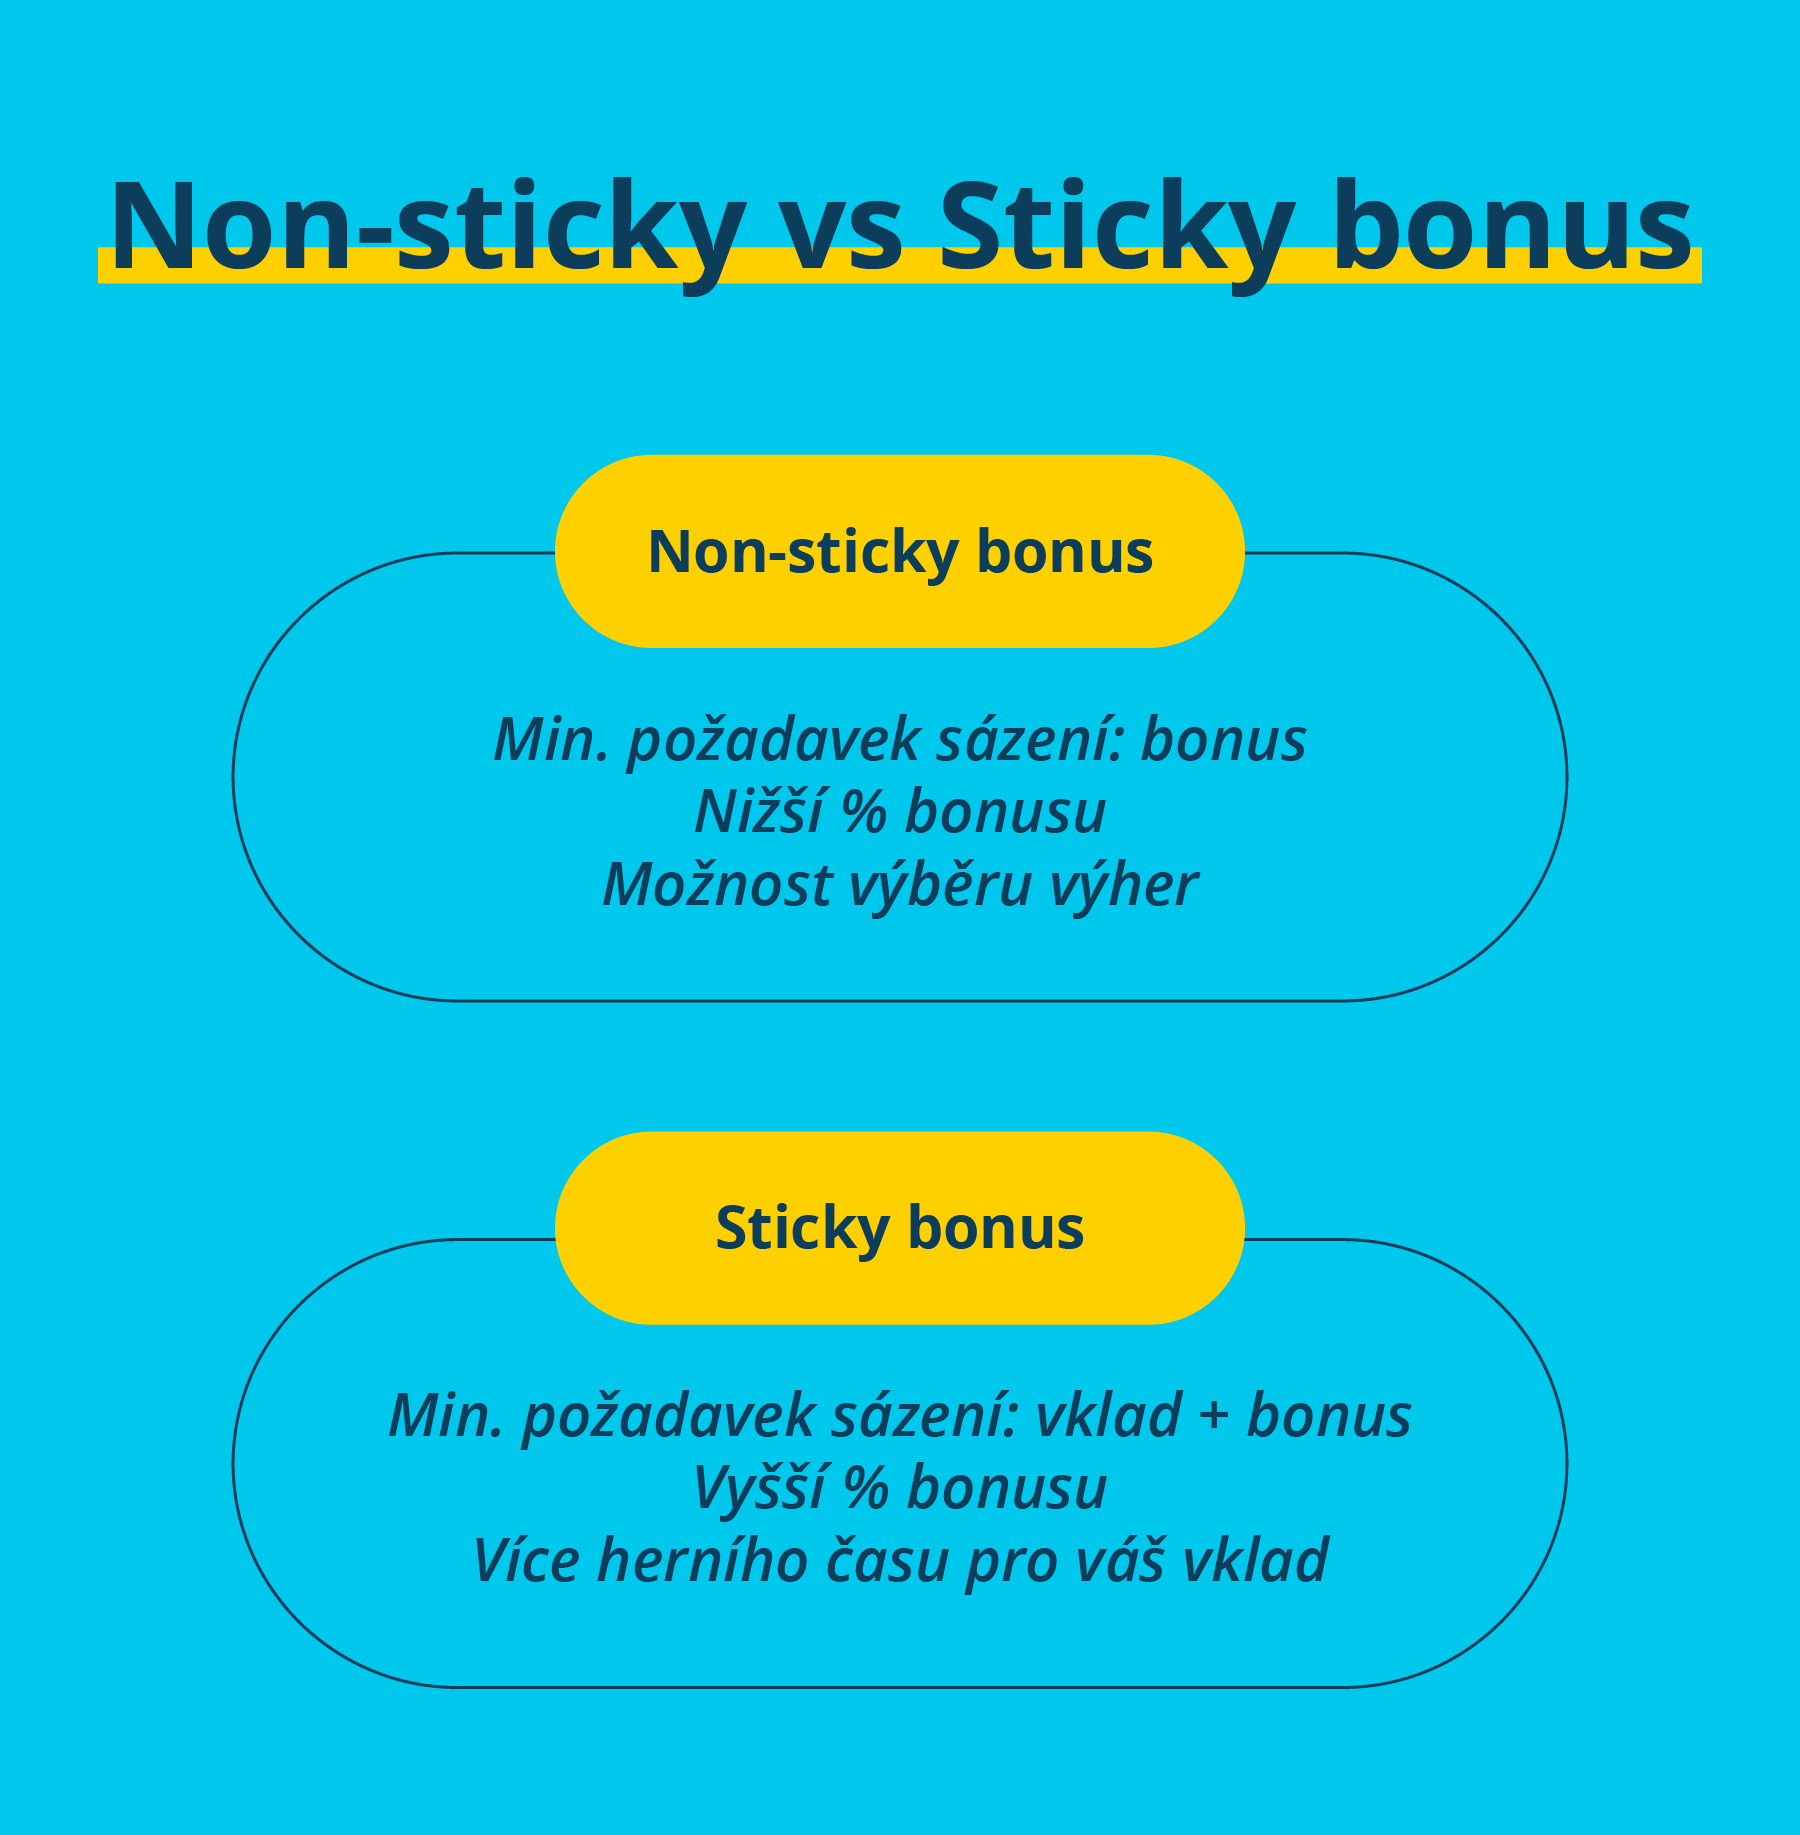 Non-sticky vs sticky bonus